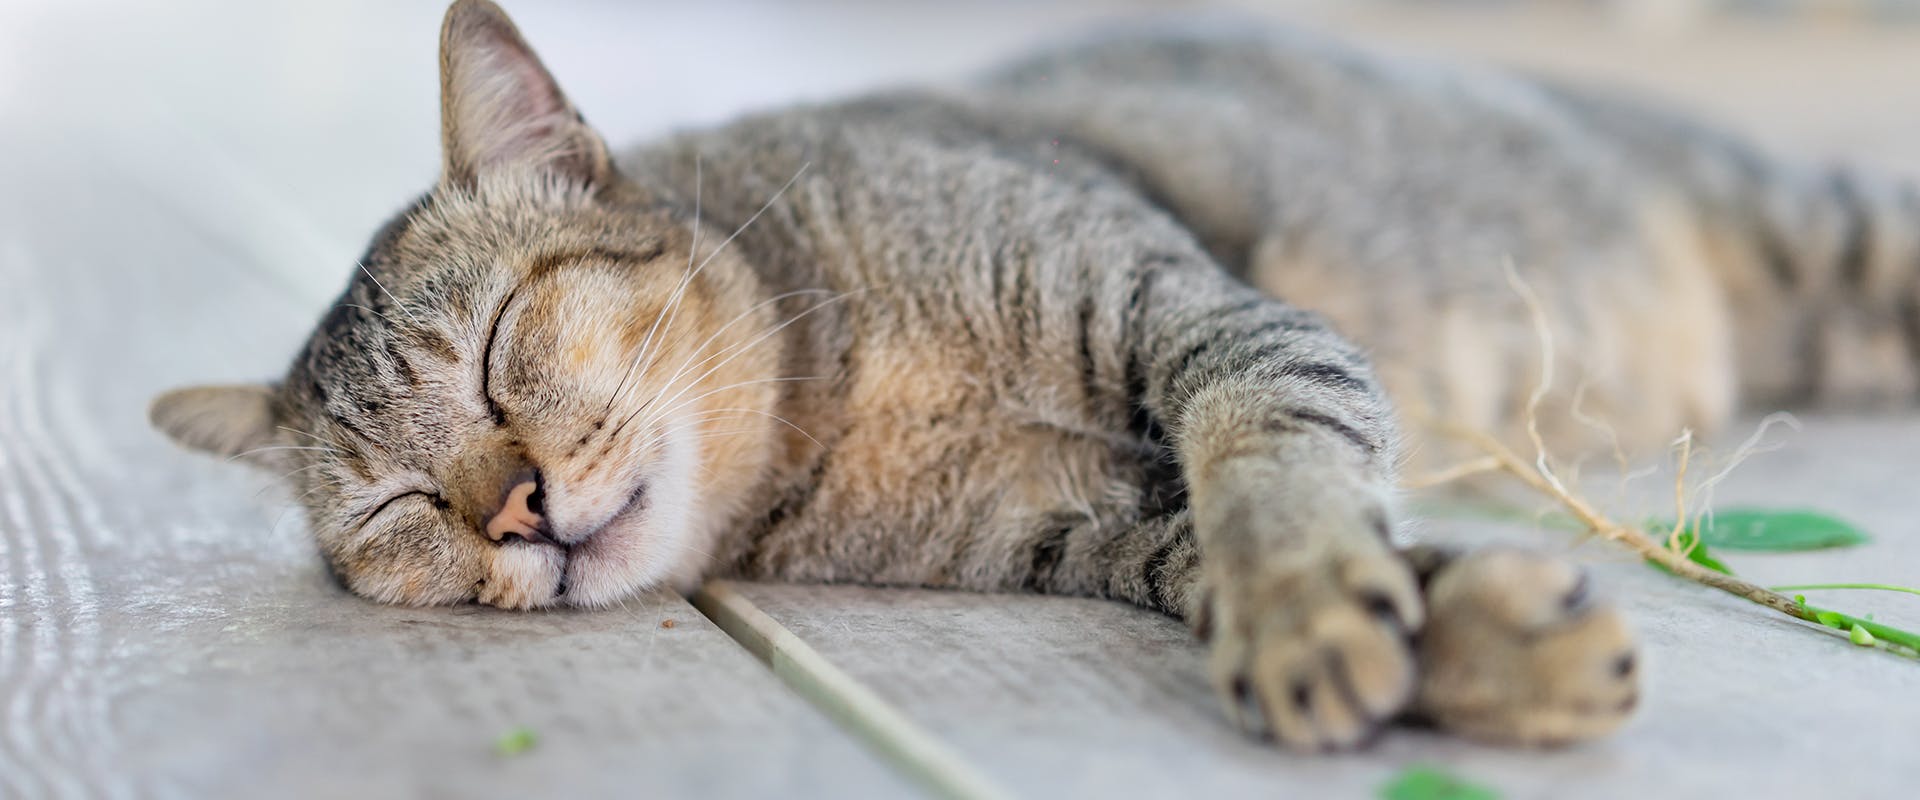 A sleepy cat feeling the effects of catnip 